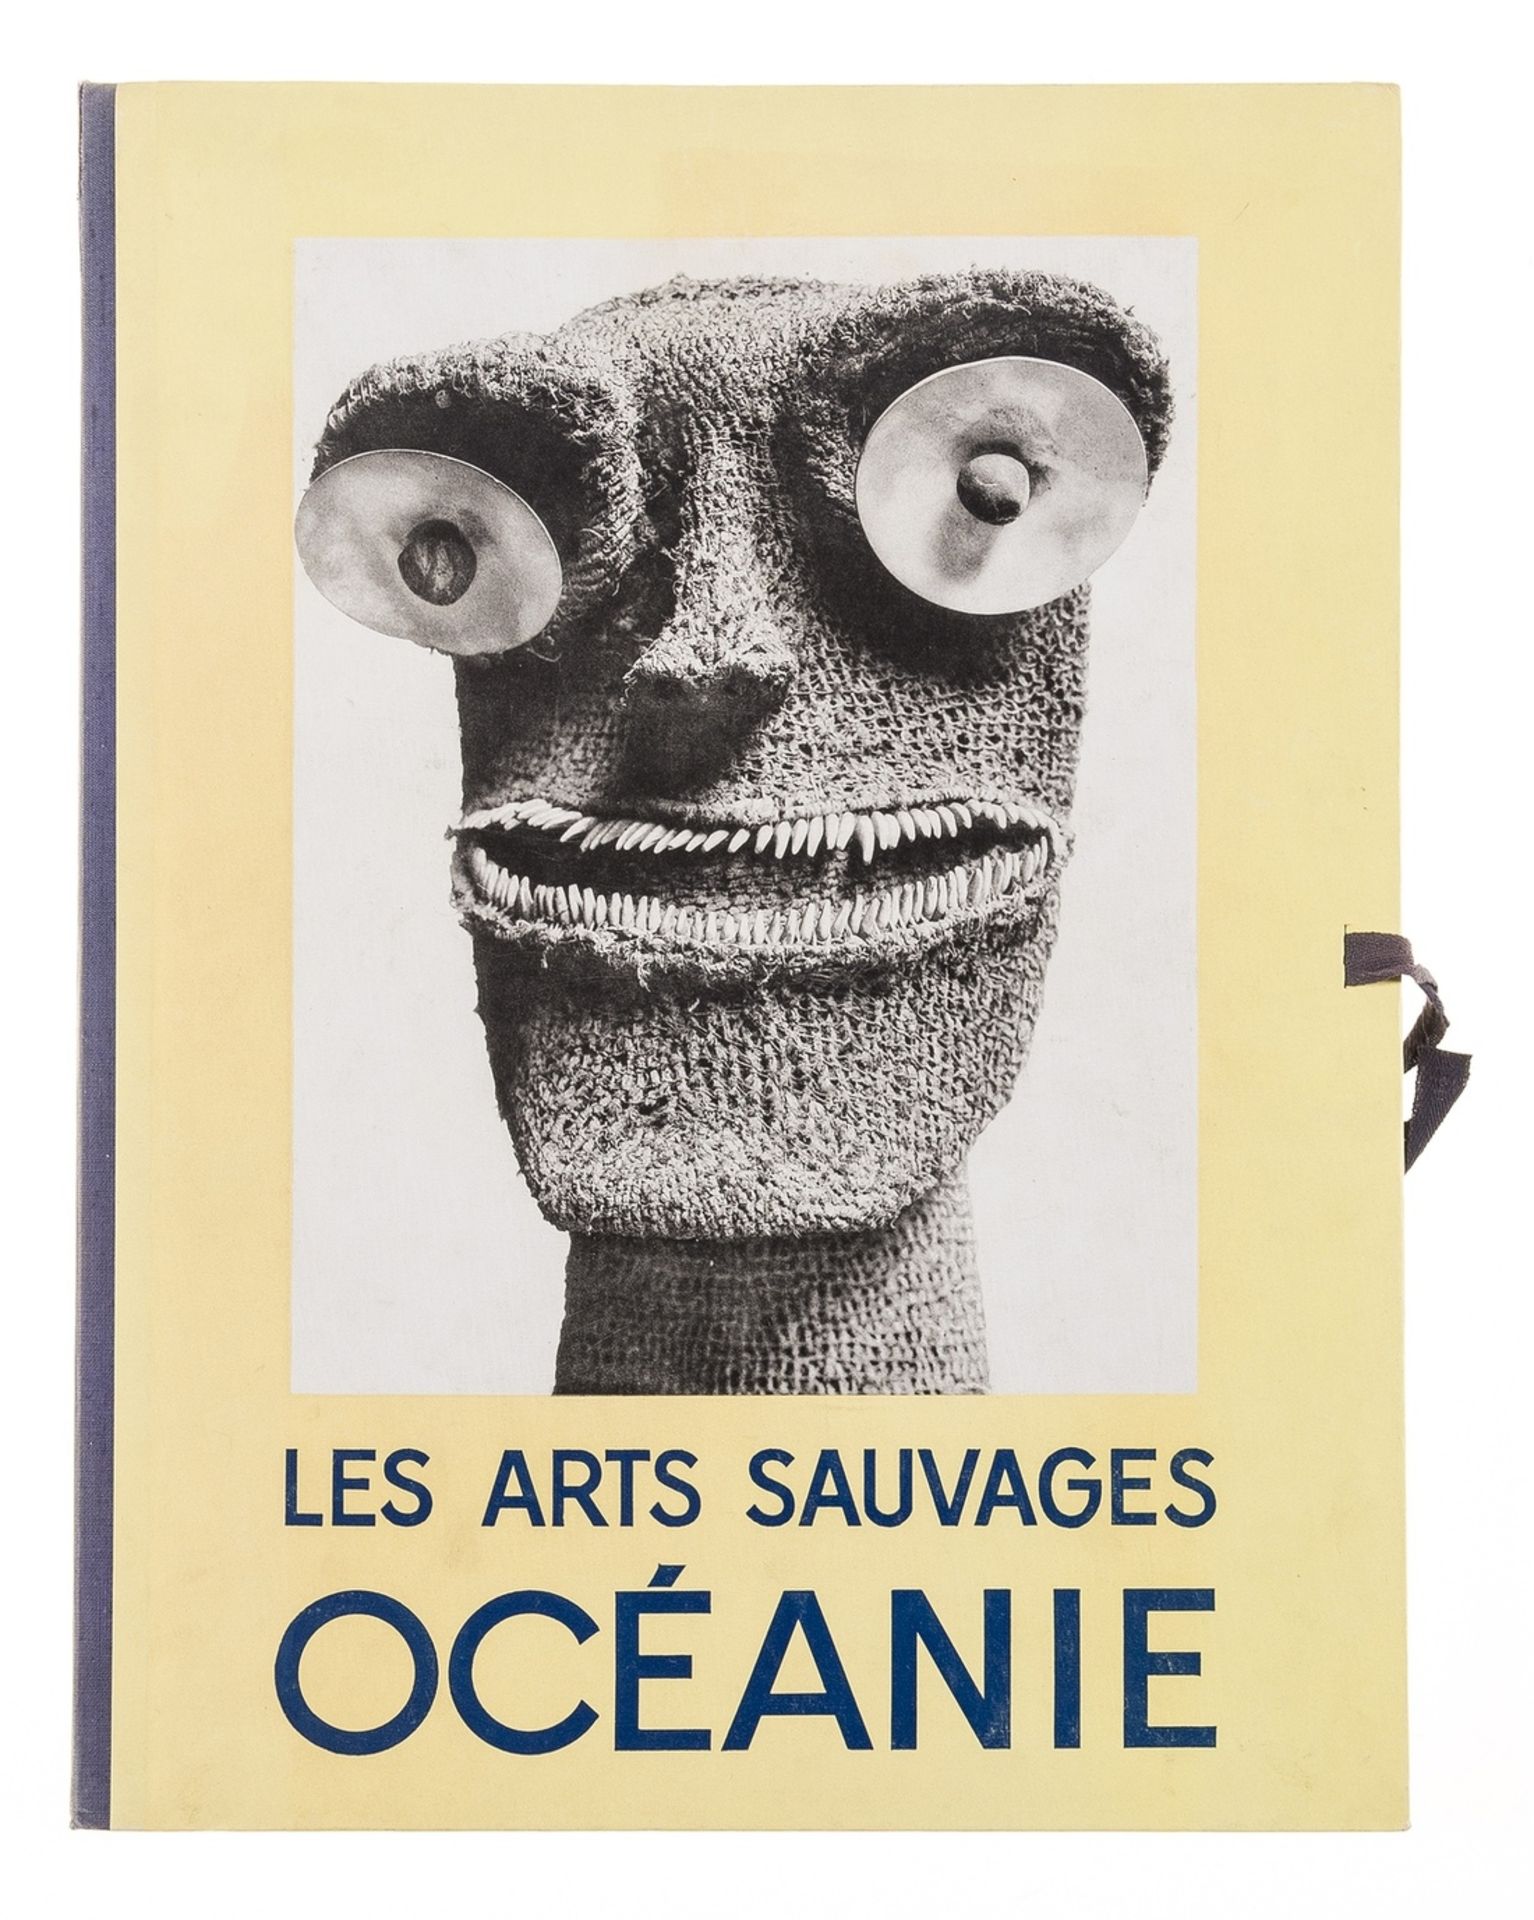 Oceania.- Poncetton (F.) and A. Portier. Les Arts Sauvages Oceanie, Paris, 1930.